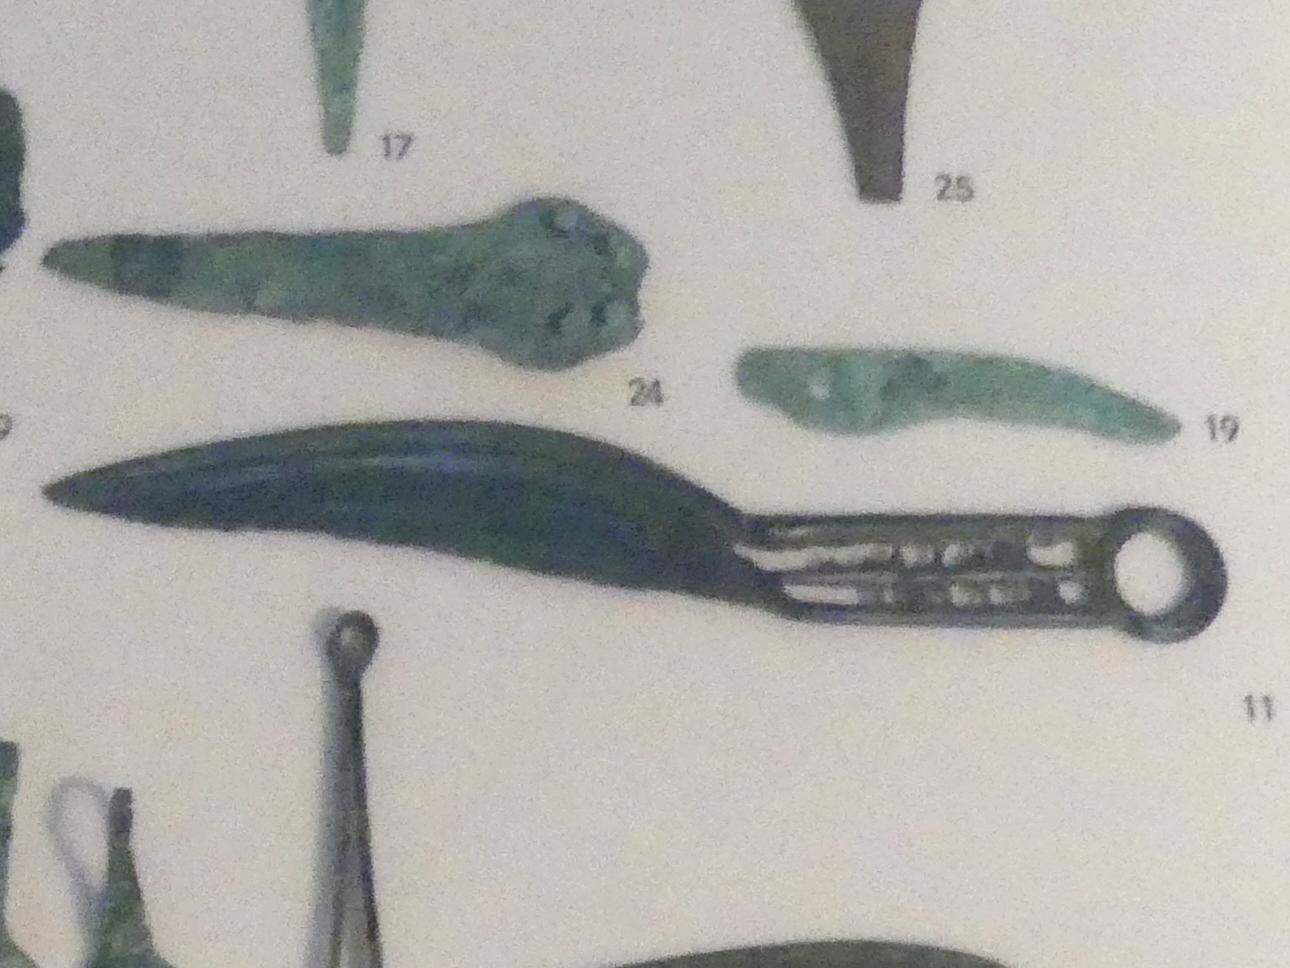 Messer mit Ringgriff, Bronzezeit, 3365 - 700 v. Chr., 1500 - 1200 v. Chr.